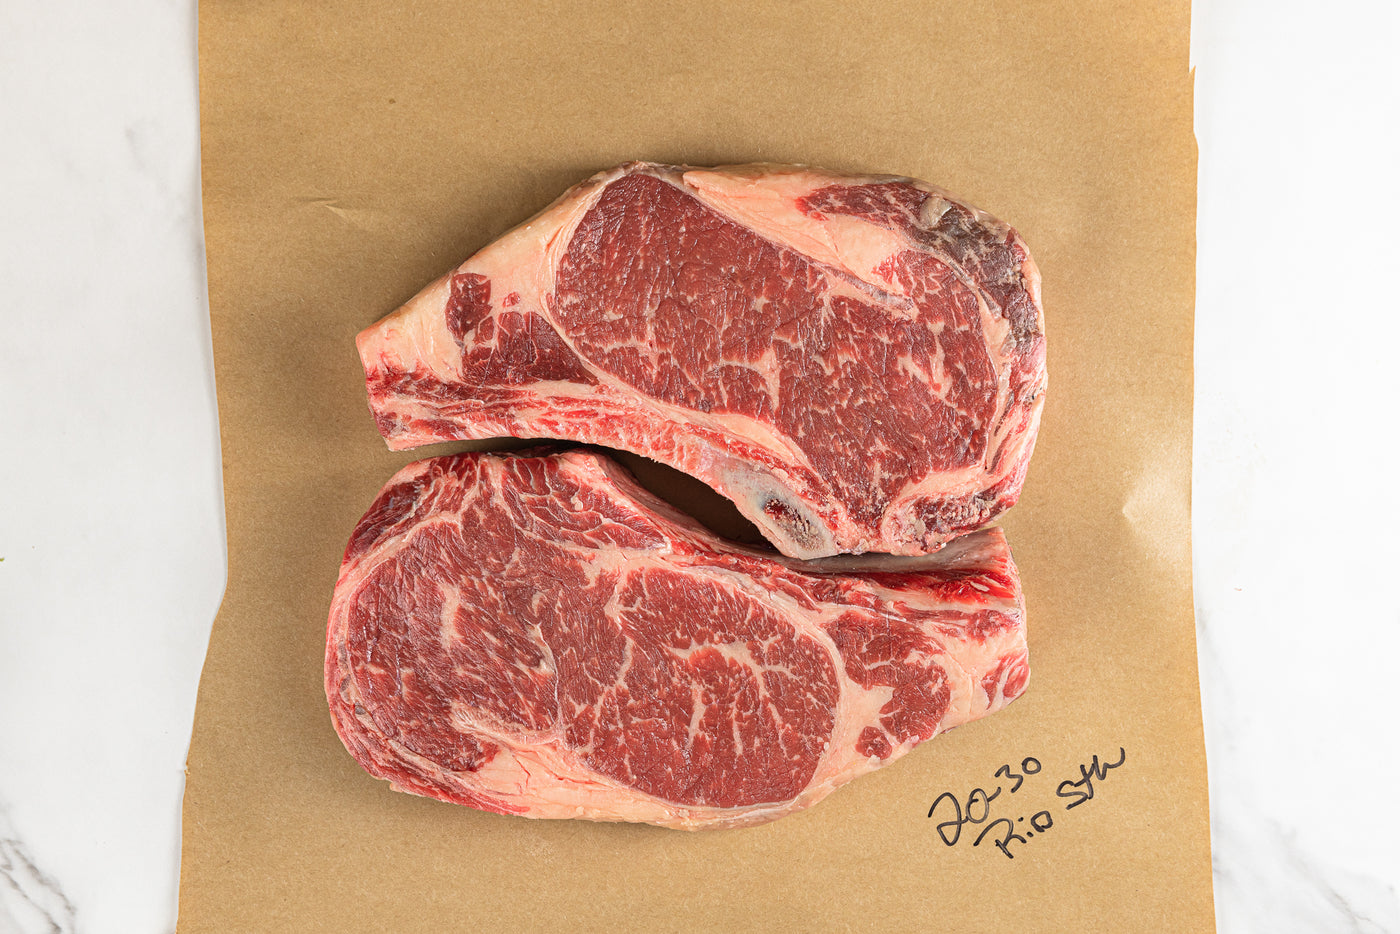 Two raw rib-eye steak on butcher paper